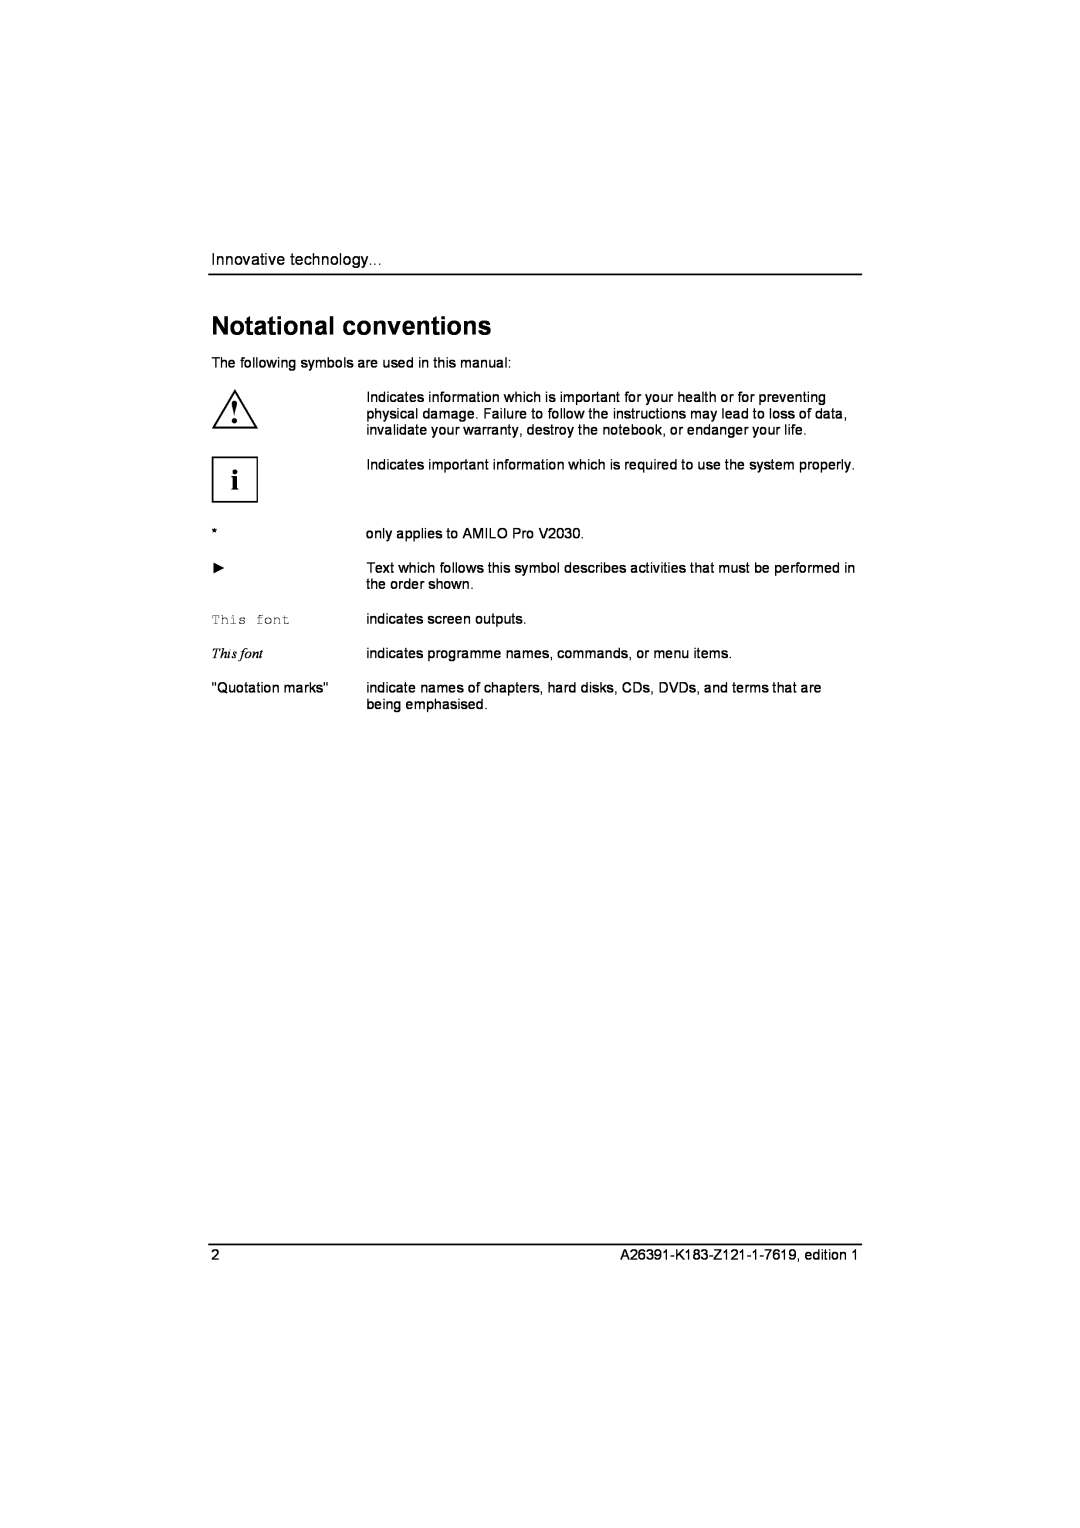 Fujitsu Siemens Computers V2035 manual Notational conventions, Innovative technology, This font 